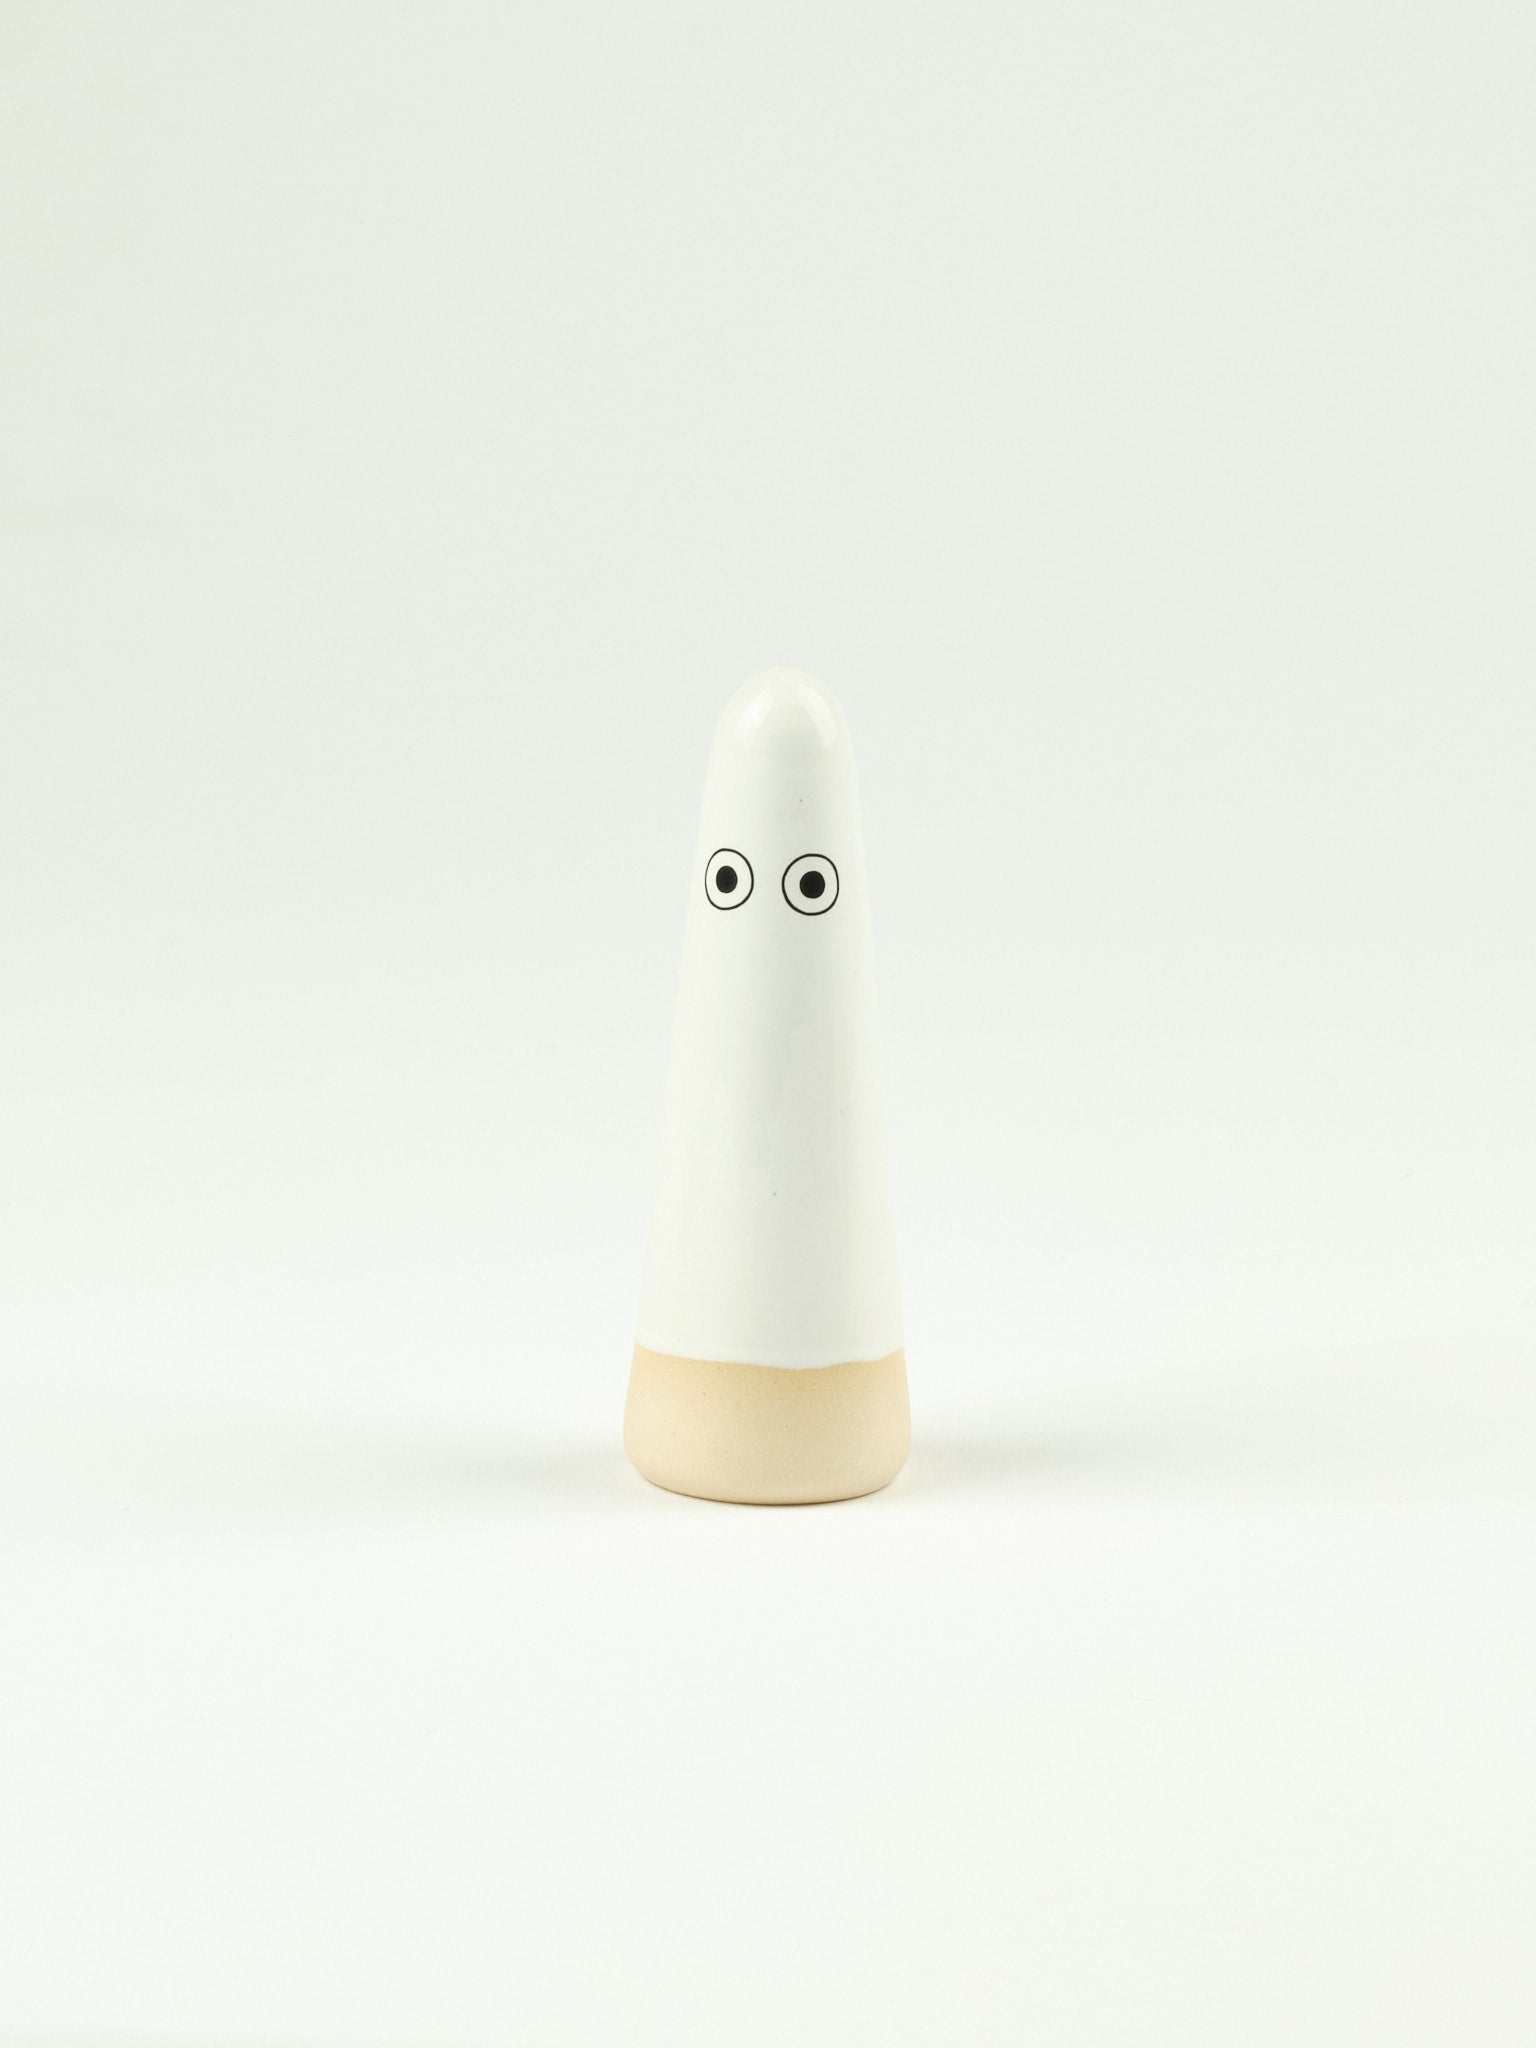 "Ceramic Ghost", by Studio Arhoj